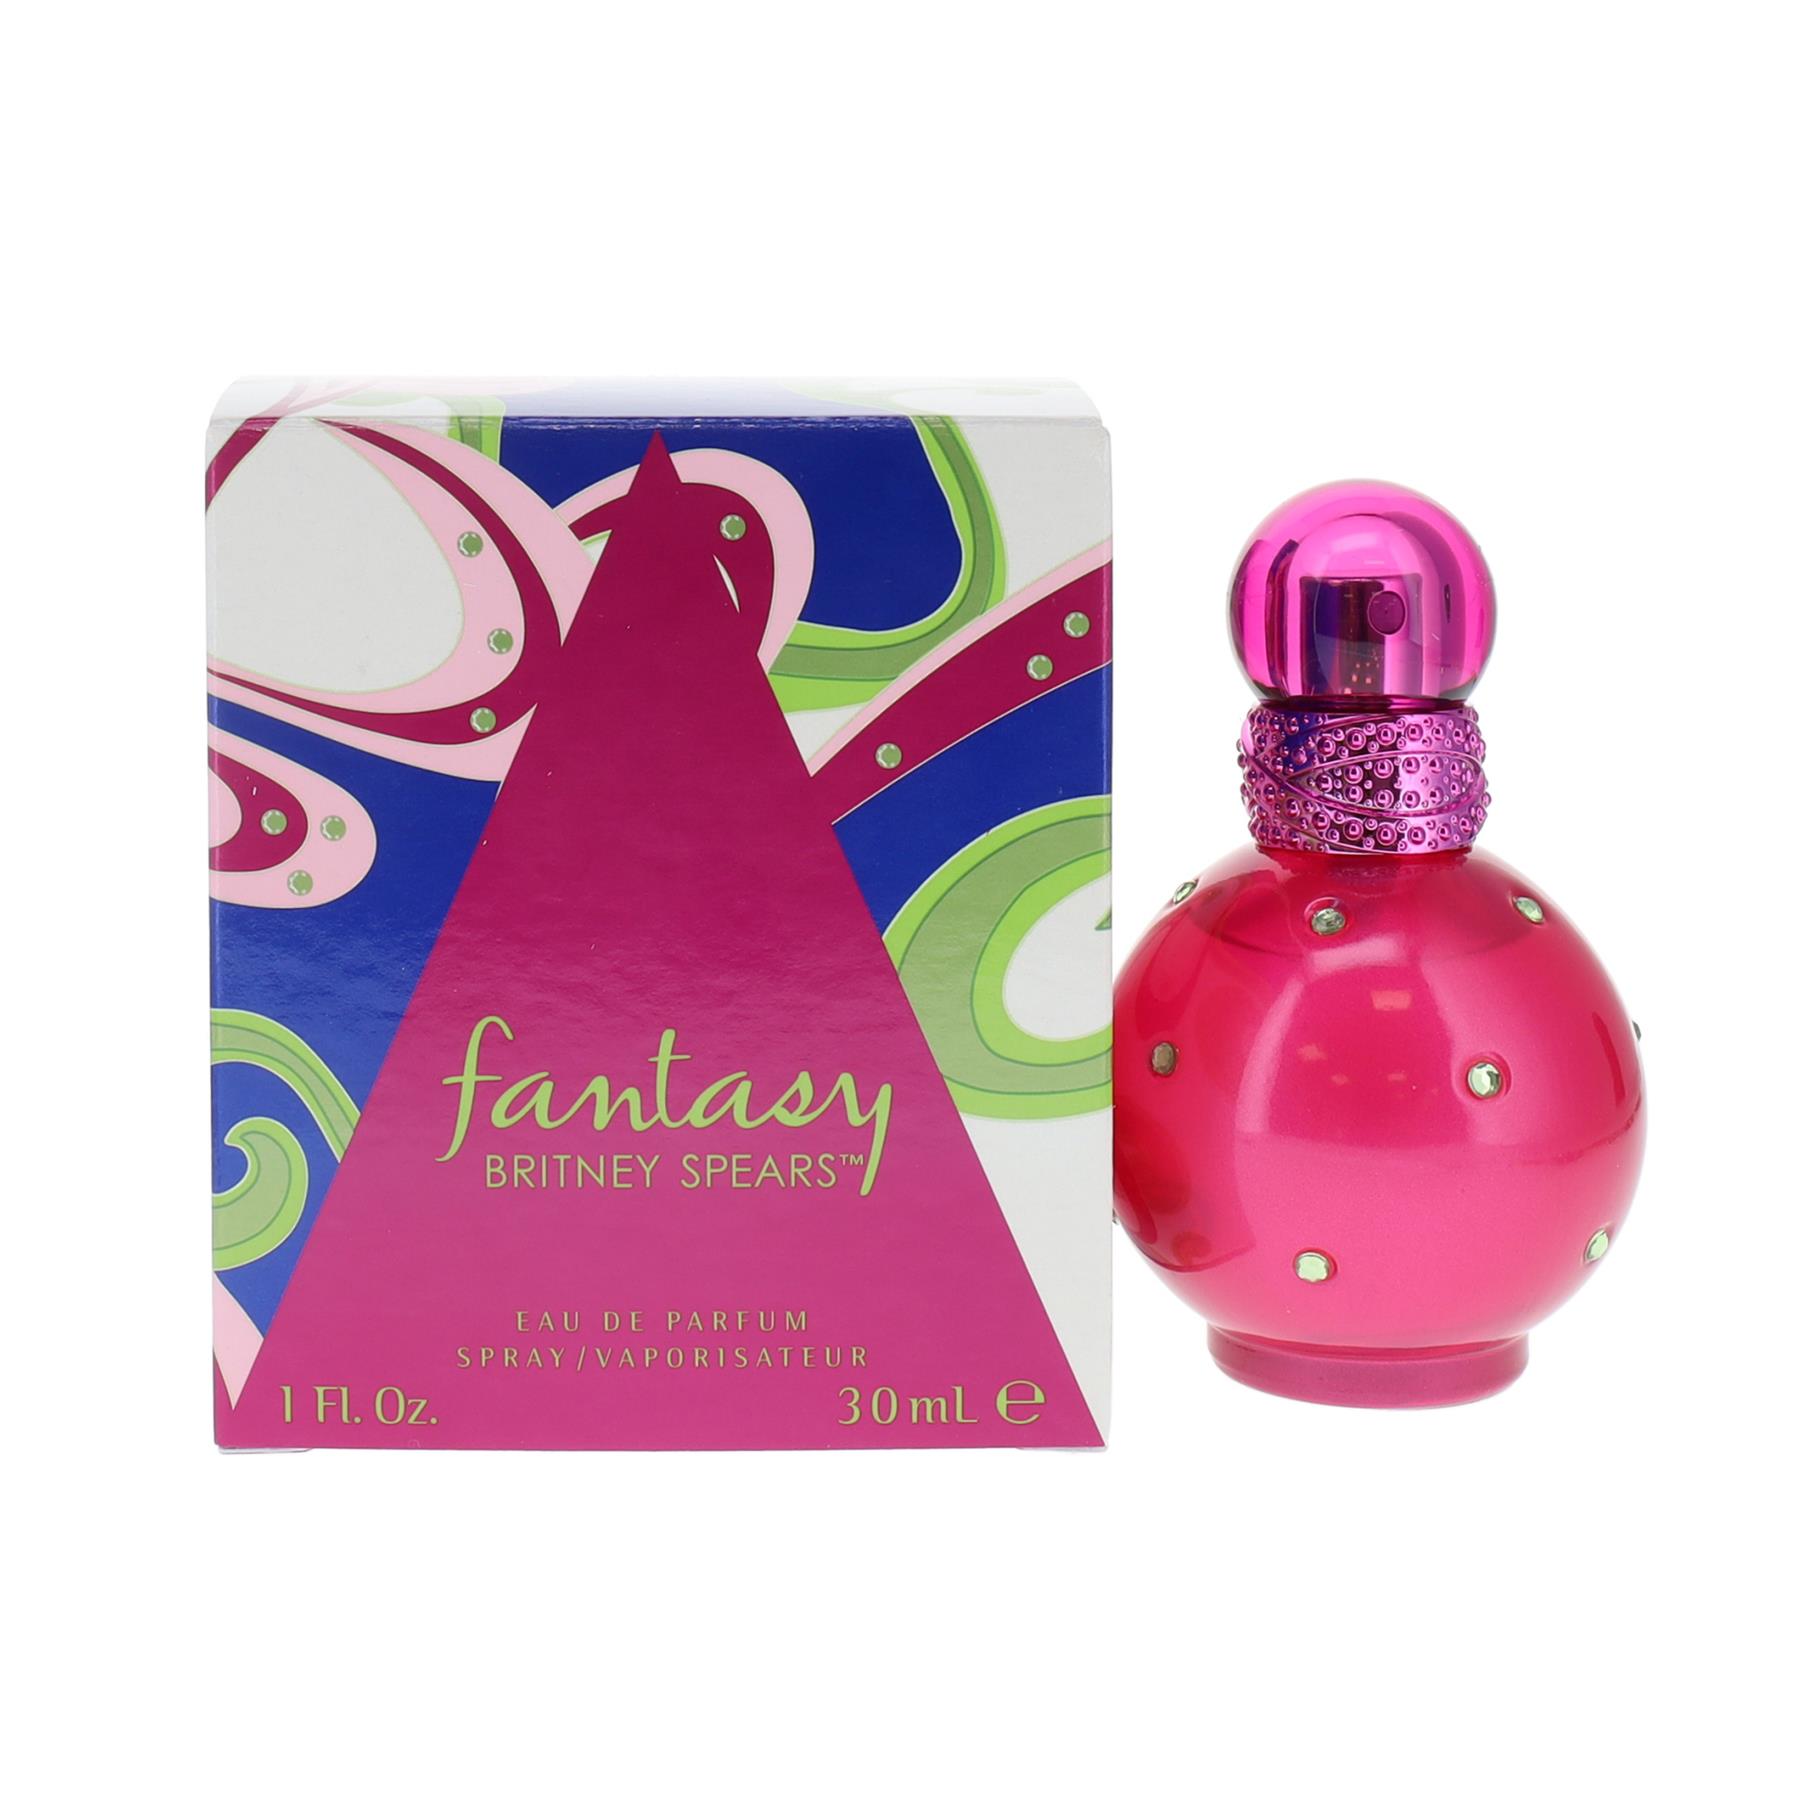 Britney Spears Fantasy Eau de Parfum Spray 30ml for Her from Perfume Plus Direct